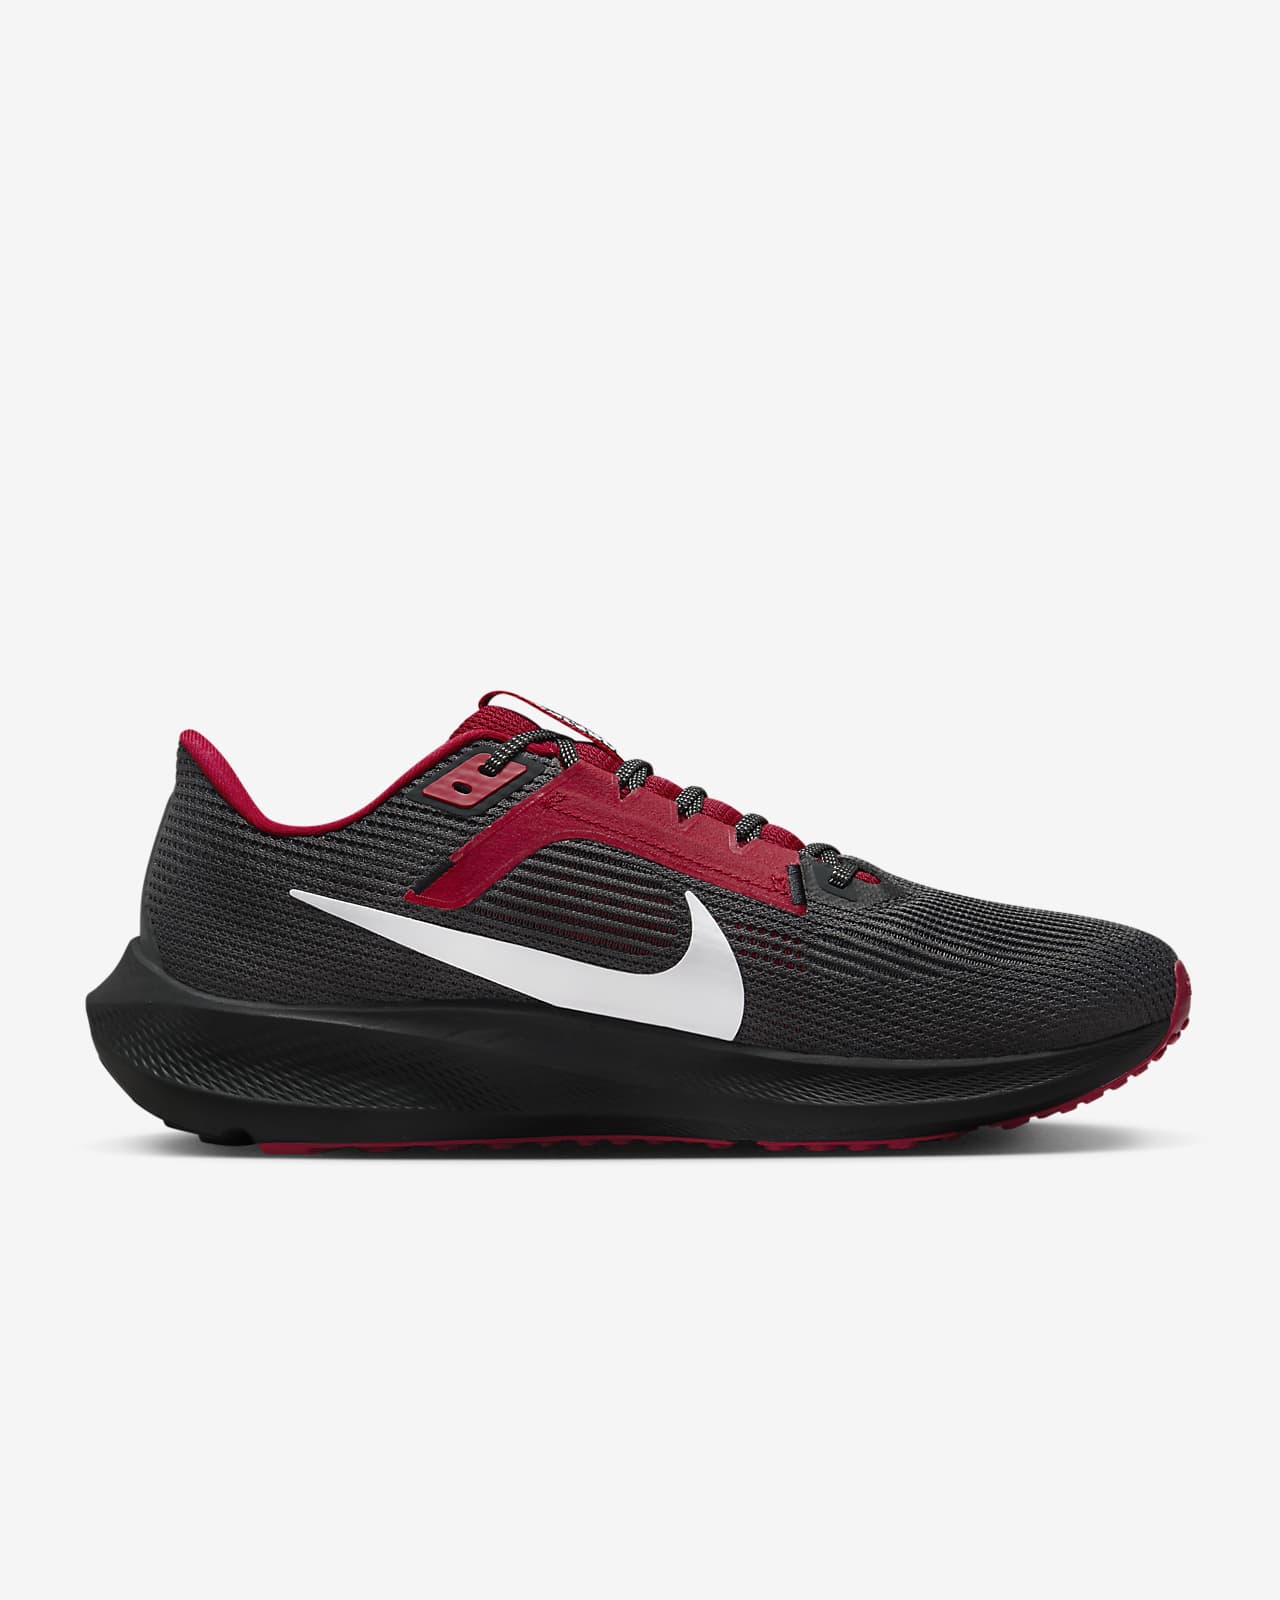 Atlanta Falcons) Men's Road Running Shoes. Nike.com